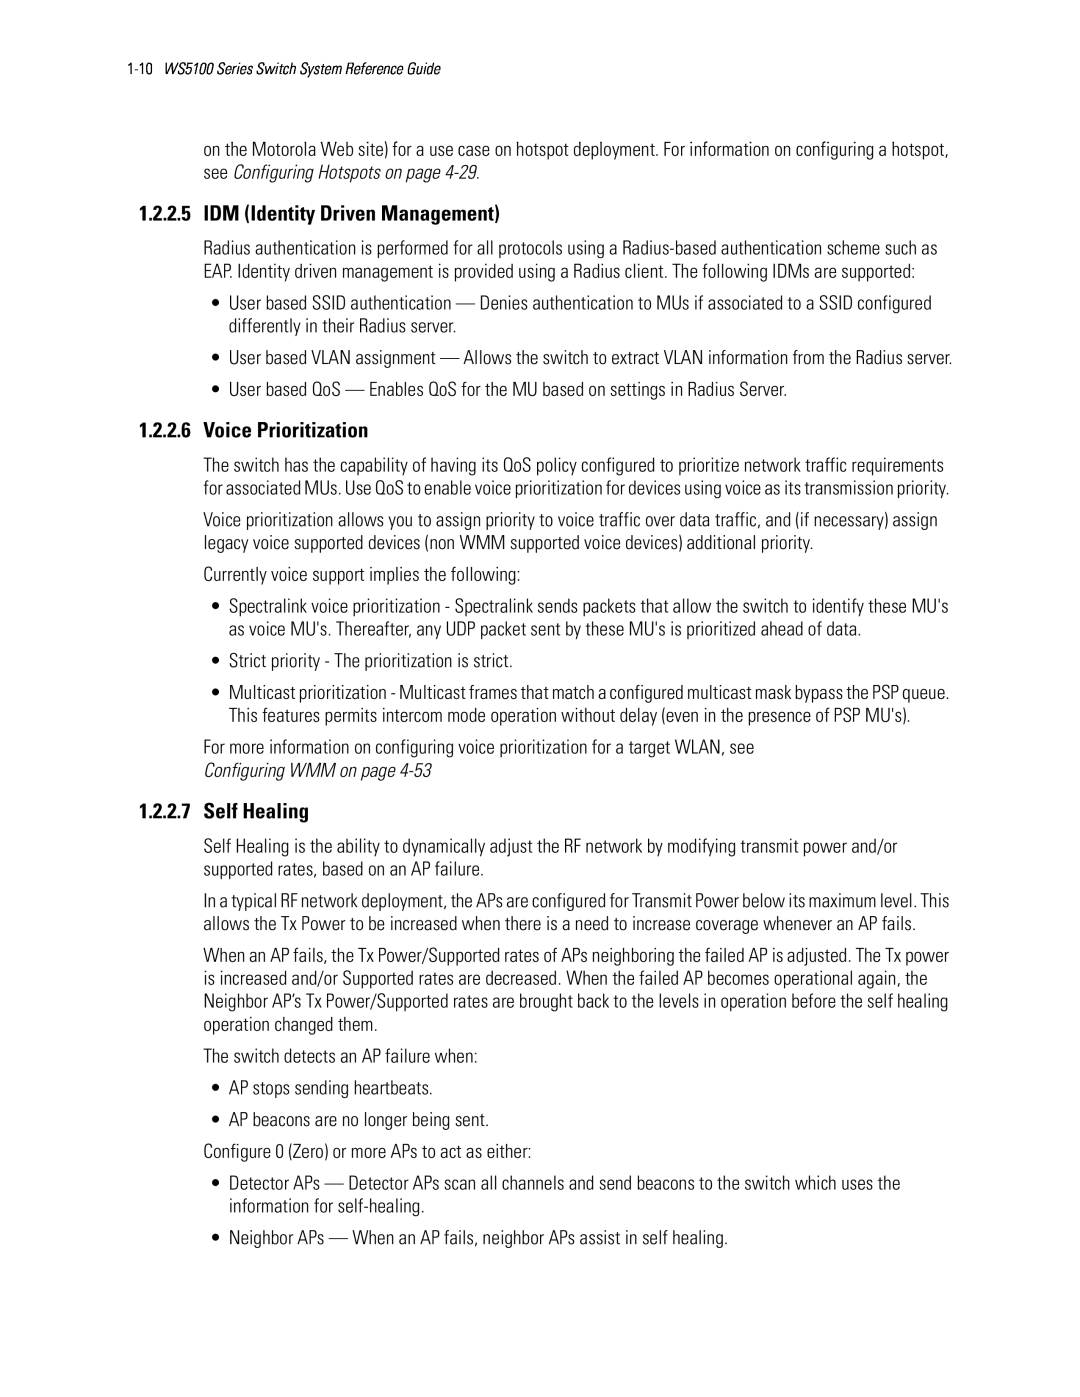 Motorola WS5100 manual 1.2.2.5IDM Identity Driven Management, 1.2.2.6Voice Prioritization, 1.2.2.7Self Healing 